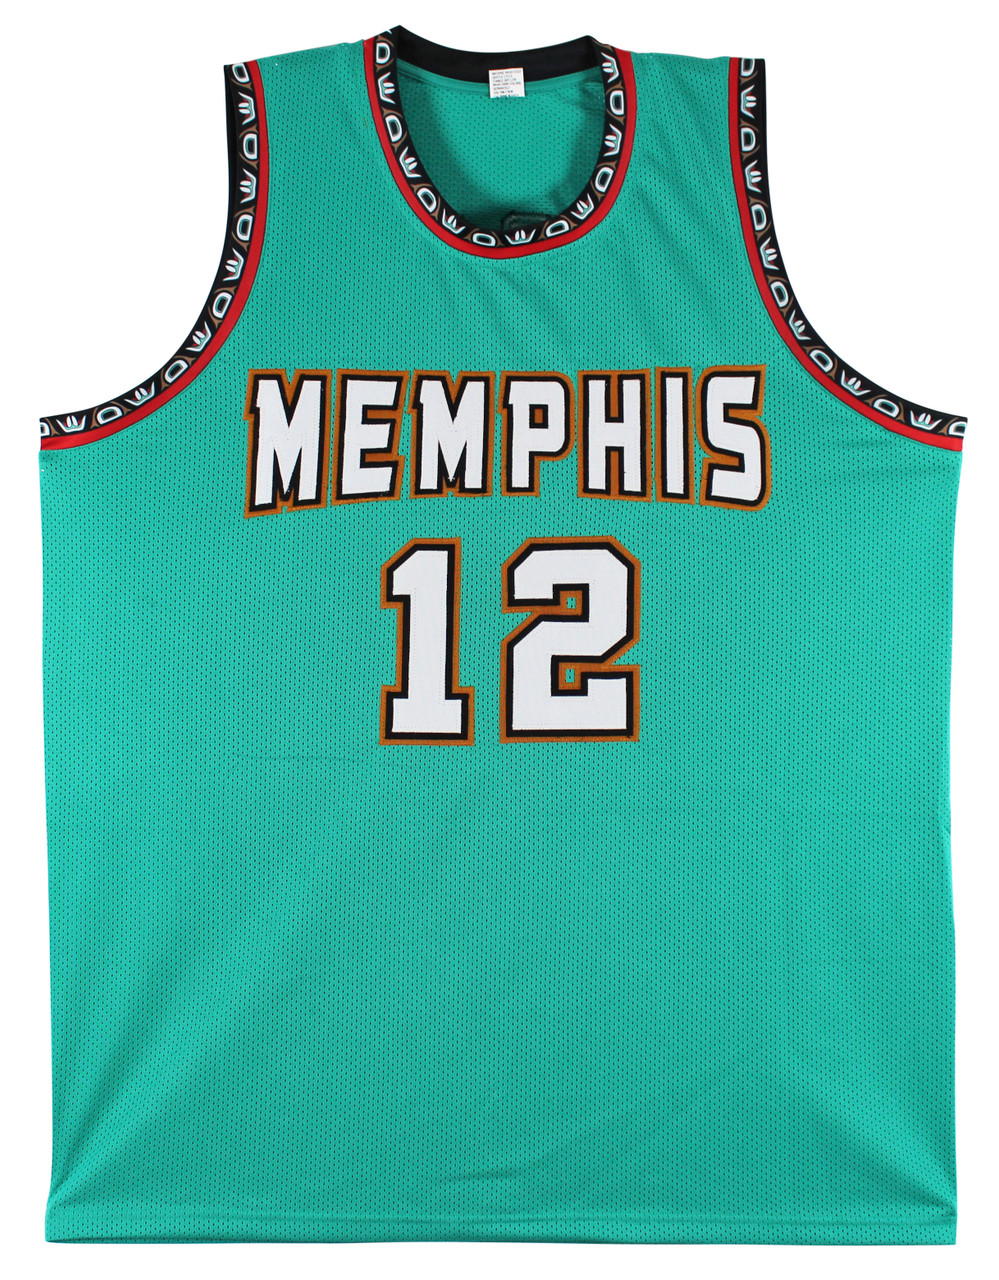 Ja Morant Memphis Grizzlies Signed Authentic NBA Swingman Nike Jersey BAS